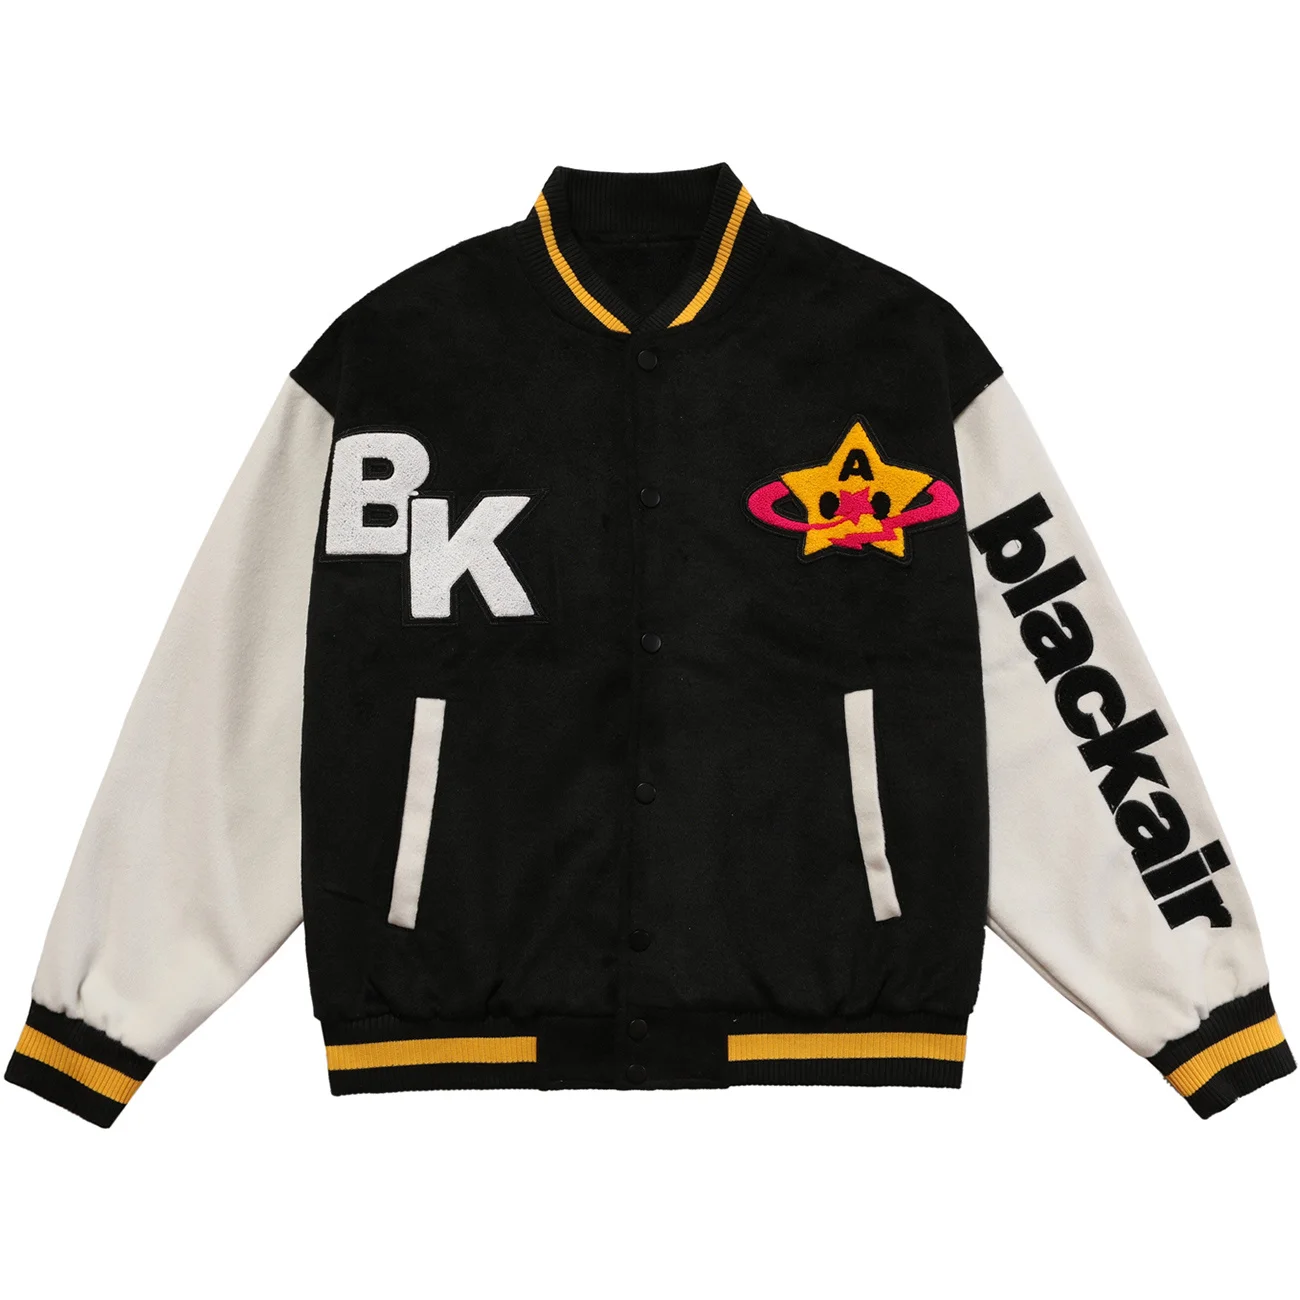 Baseball Men Jacket Coat Bomber Jacket Hip Hop Streetwear Star Skull Embroidery Autumn Unisex Casual Varsity Jacket Coat